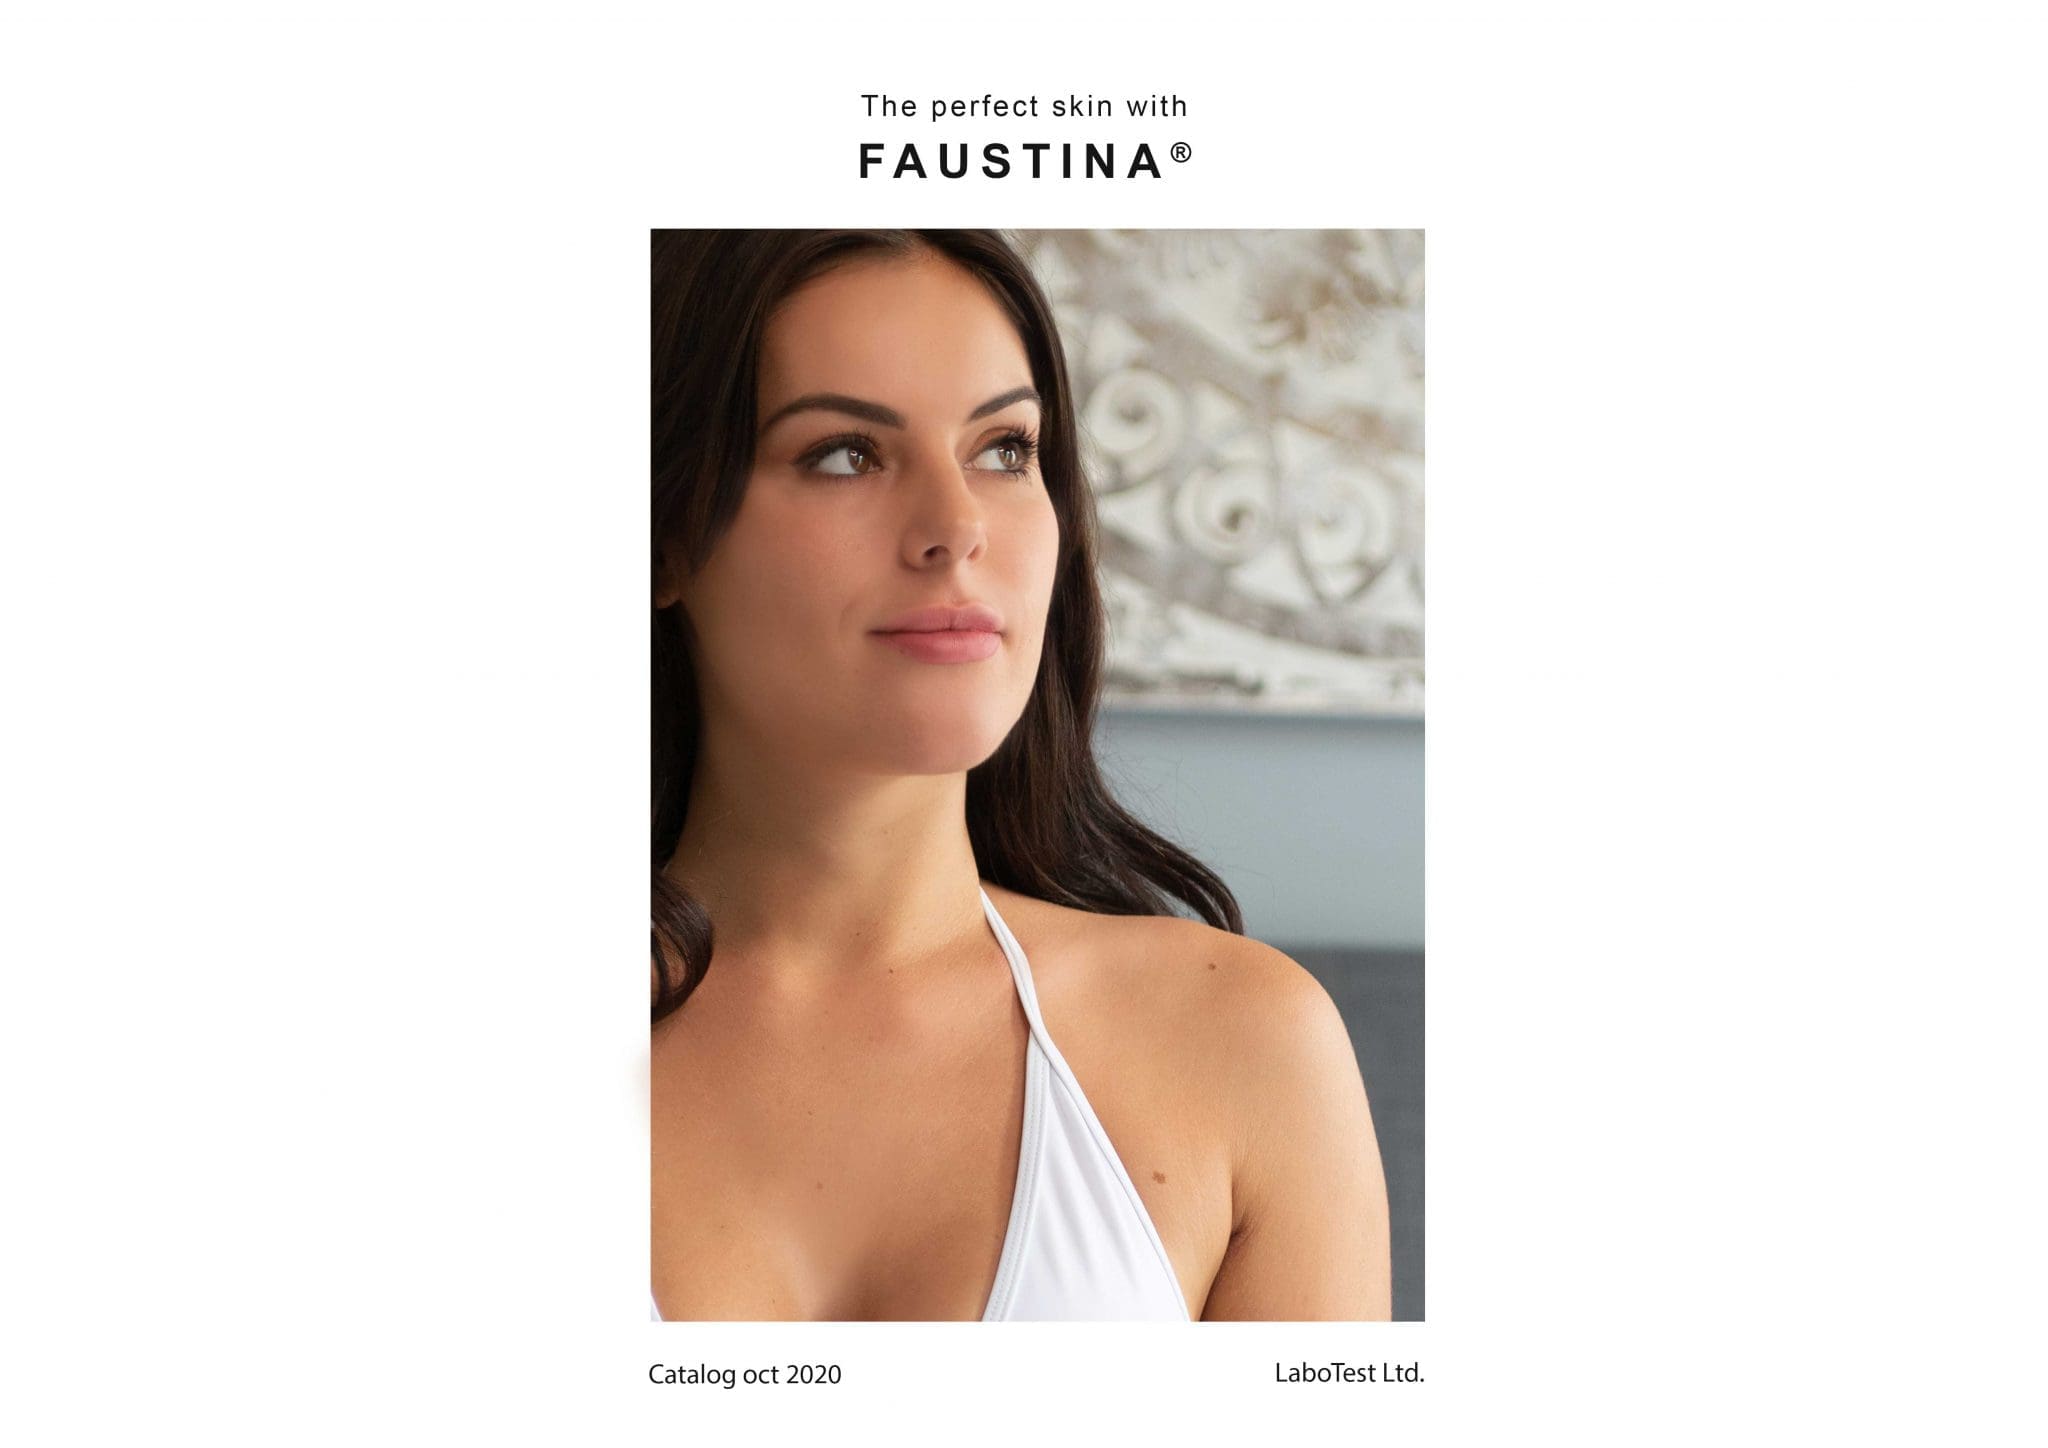 Faustina IPL catalogue cover